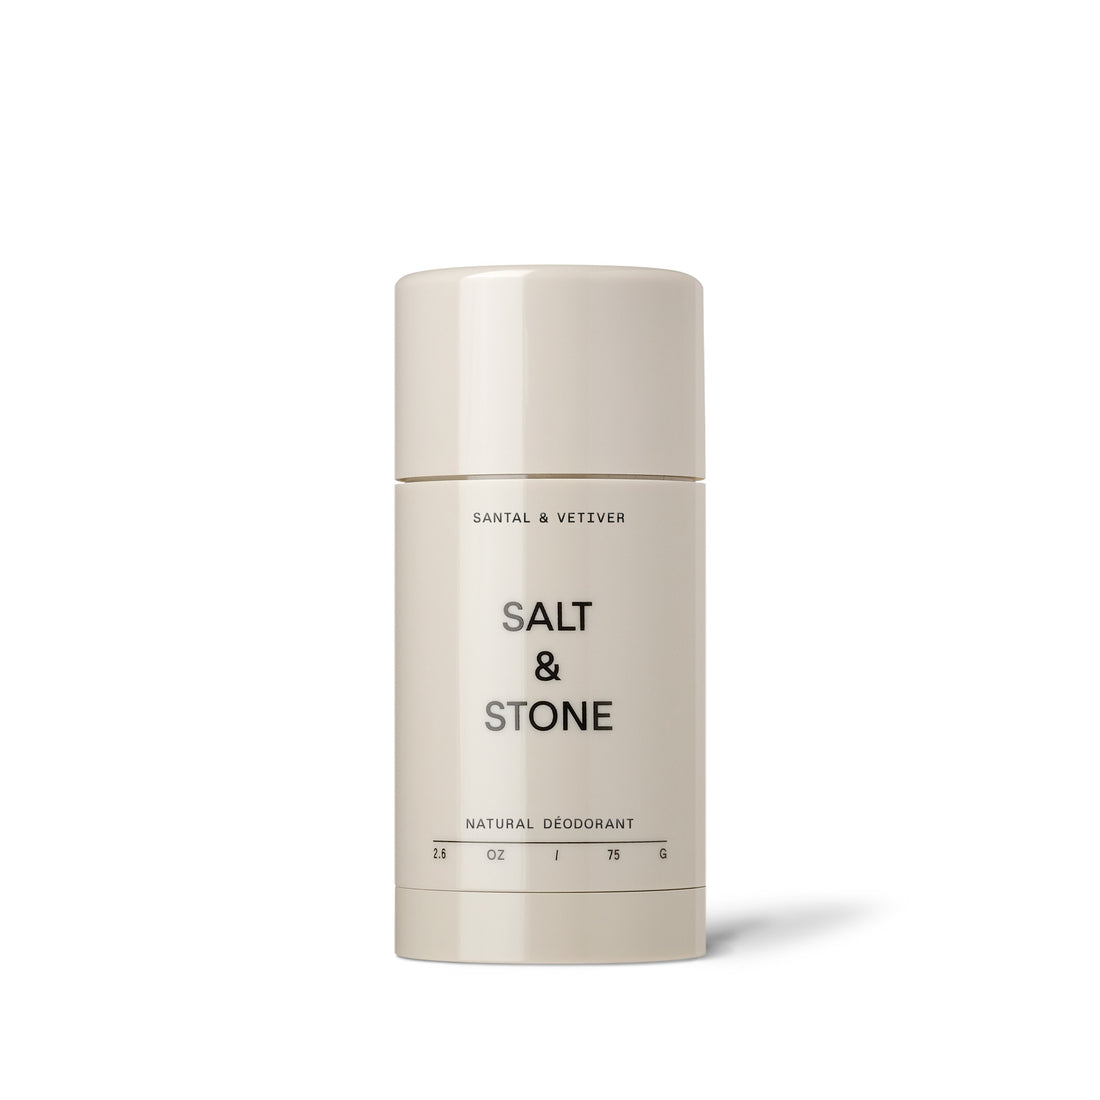 Salt & Stone Natural Deodorant Santal & Vetiver (extra strength)